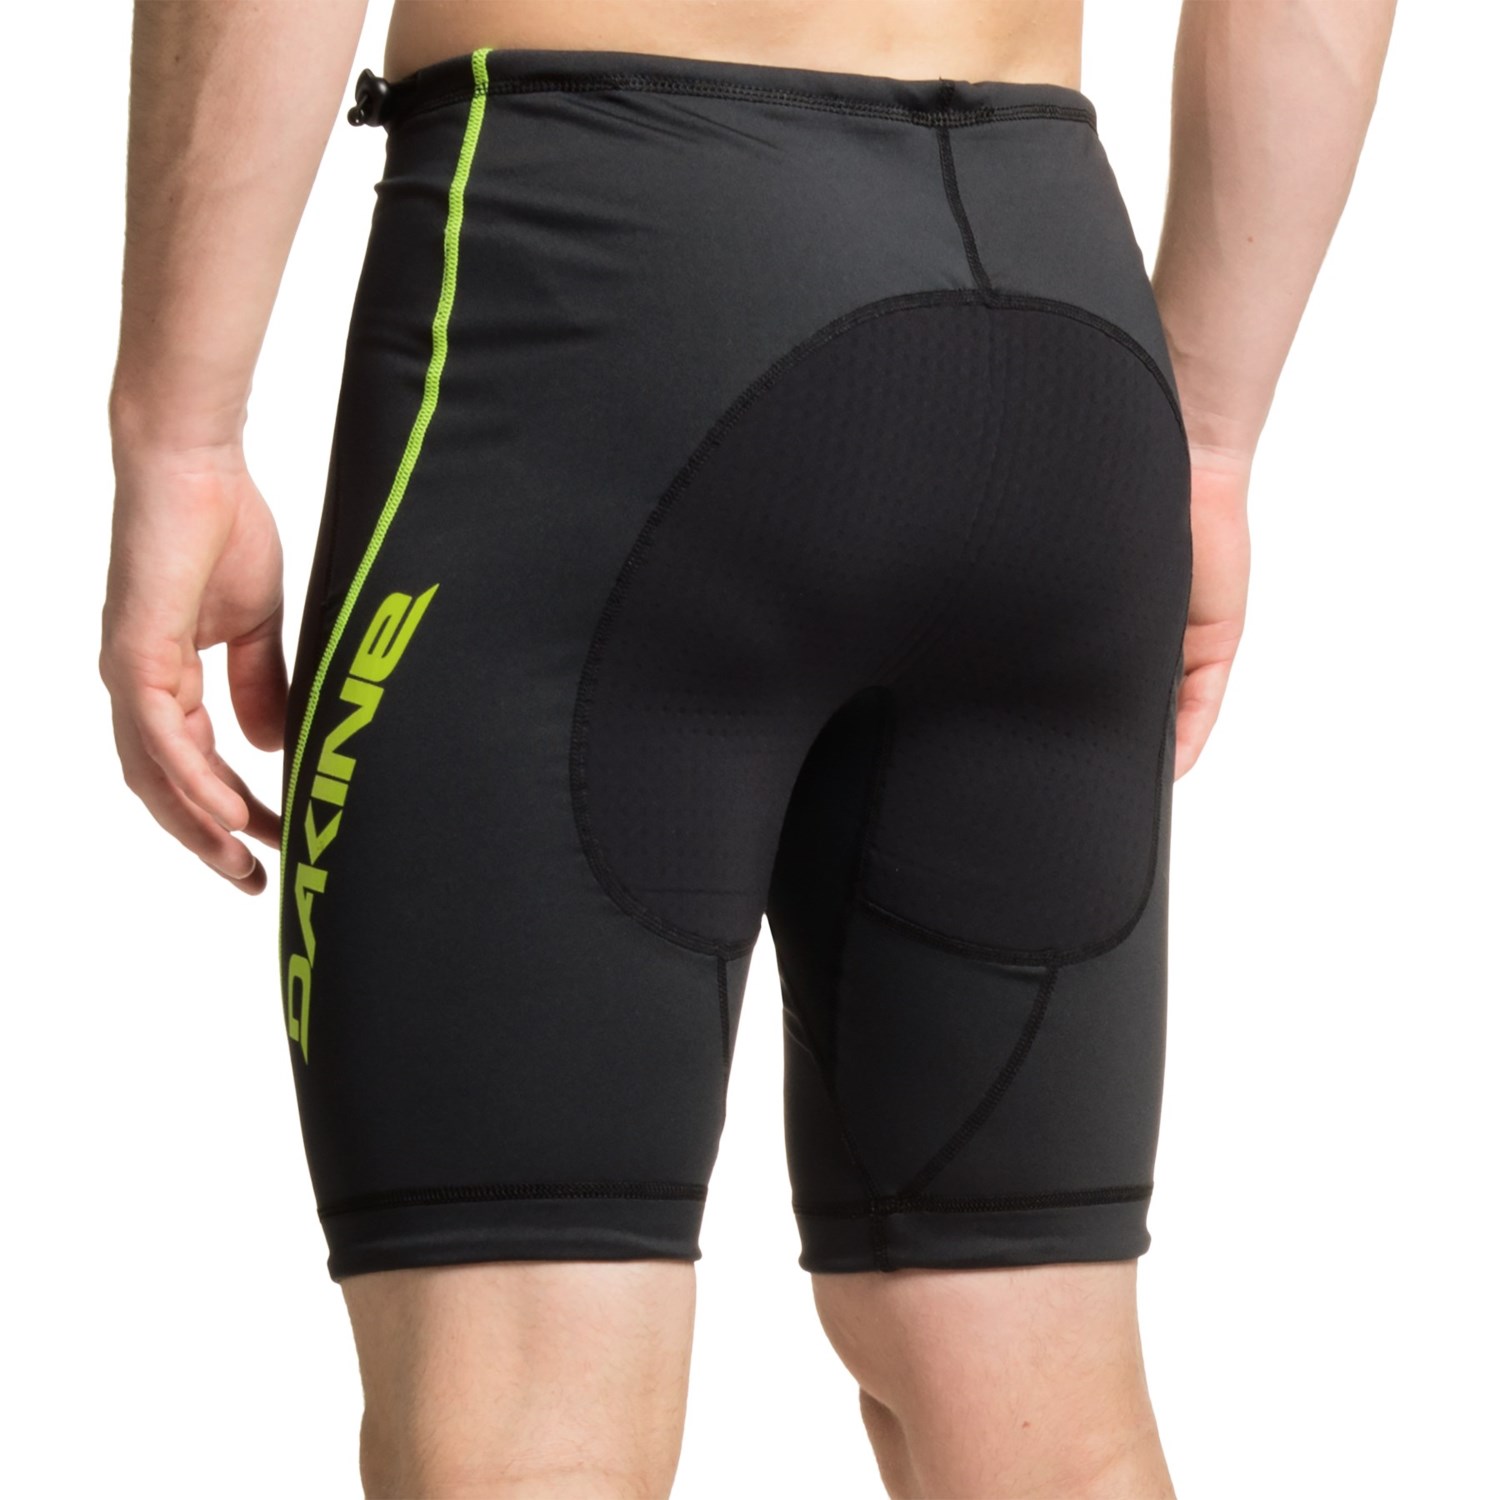 DaKine Outrigger Padded Shorts (For Men) - Save 70%